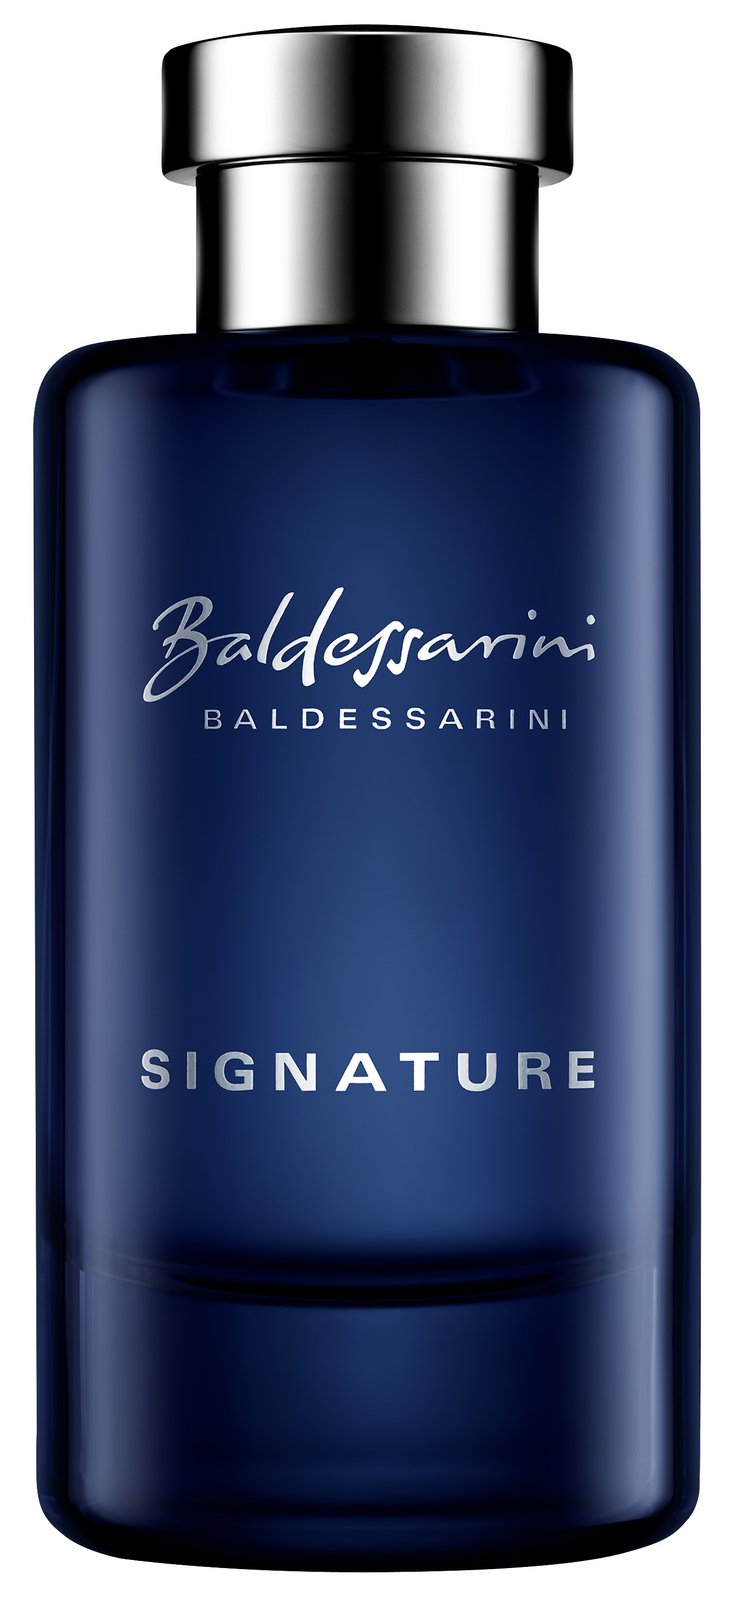 Baldessarini Signature, Eau de Toilette Natural Spray, 50ml, 1342 Kč